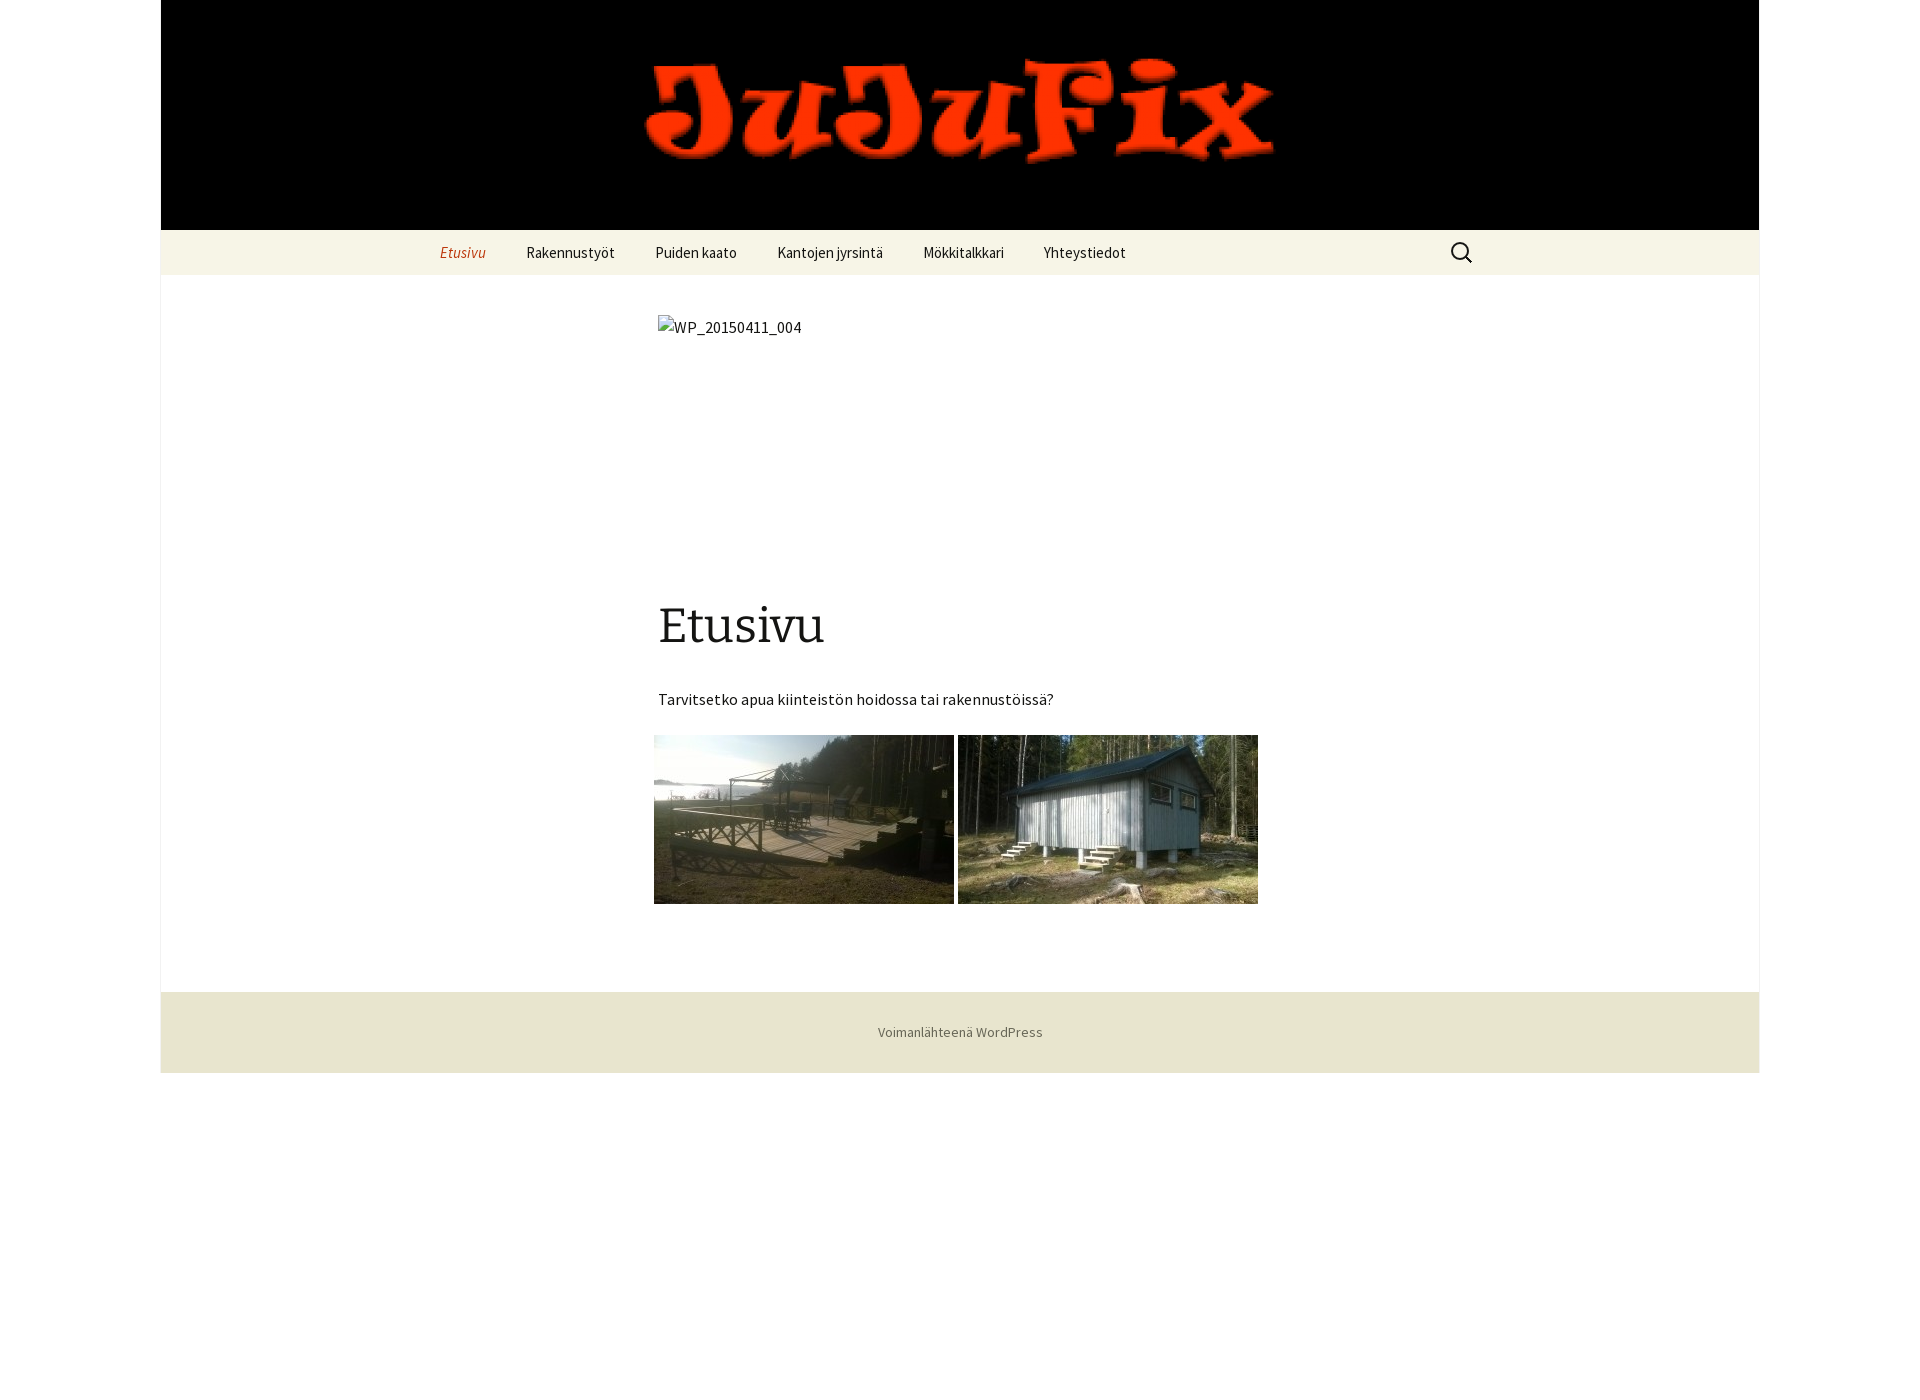 Screenshot for jujufix.fi